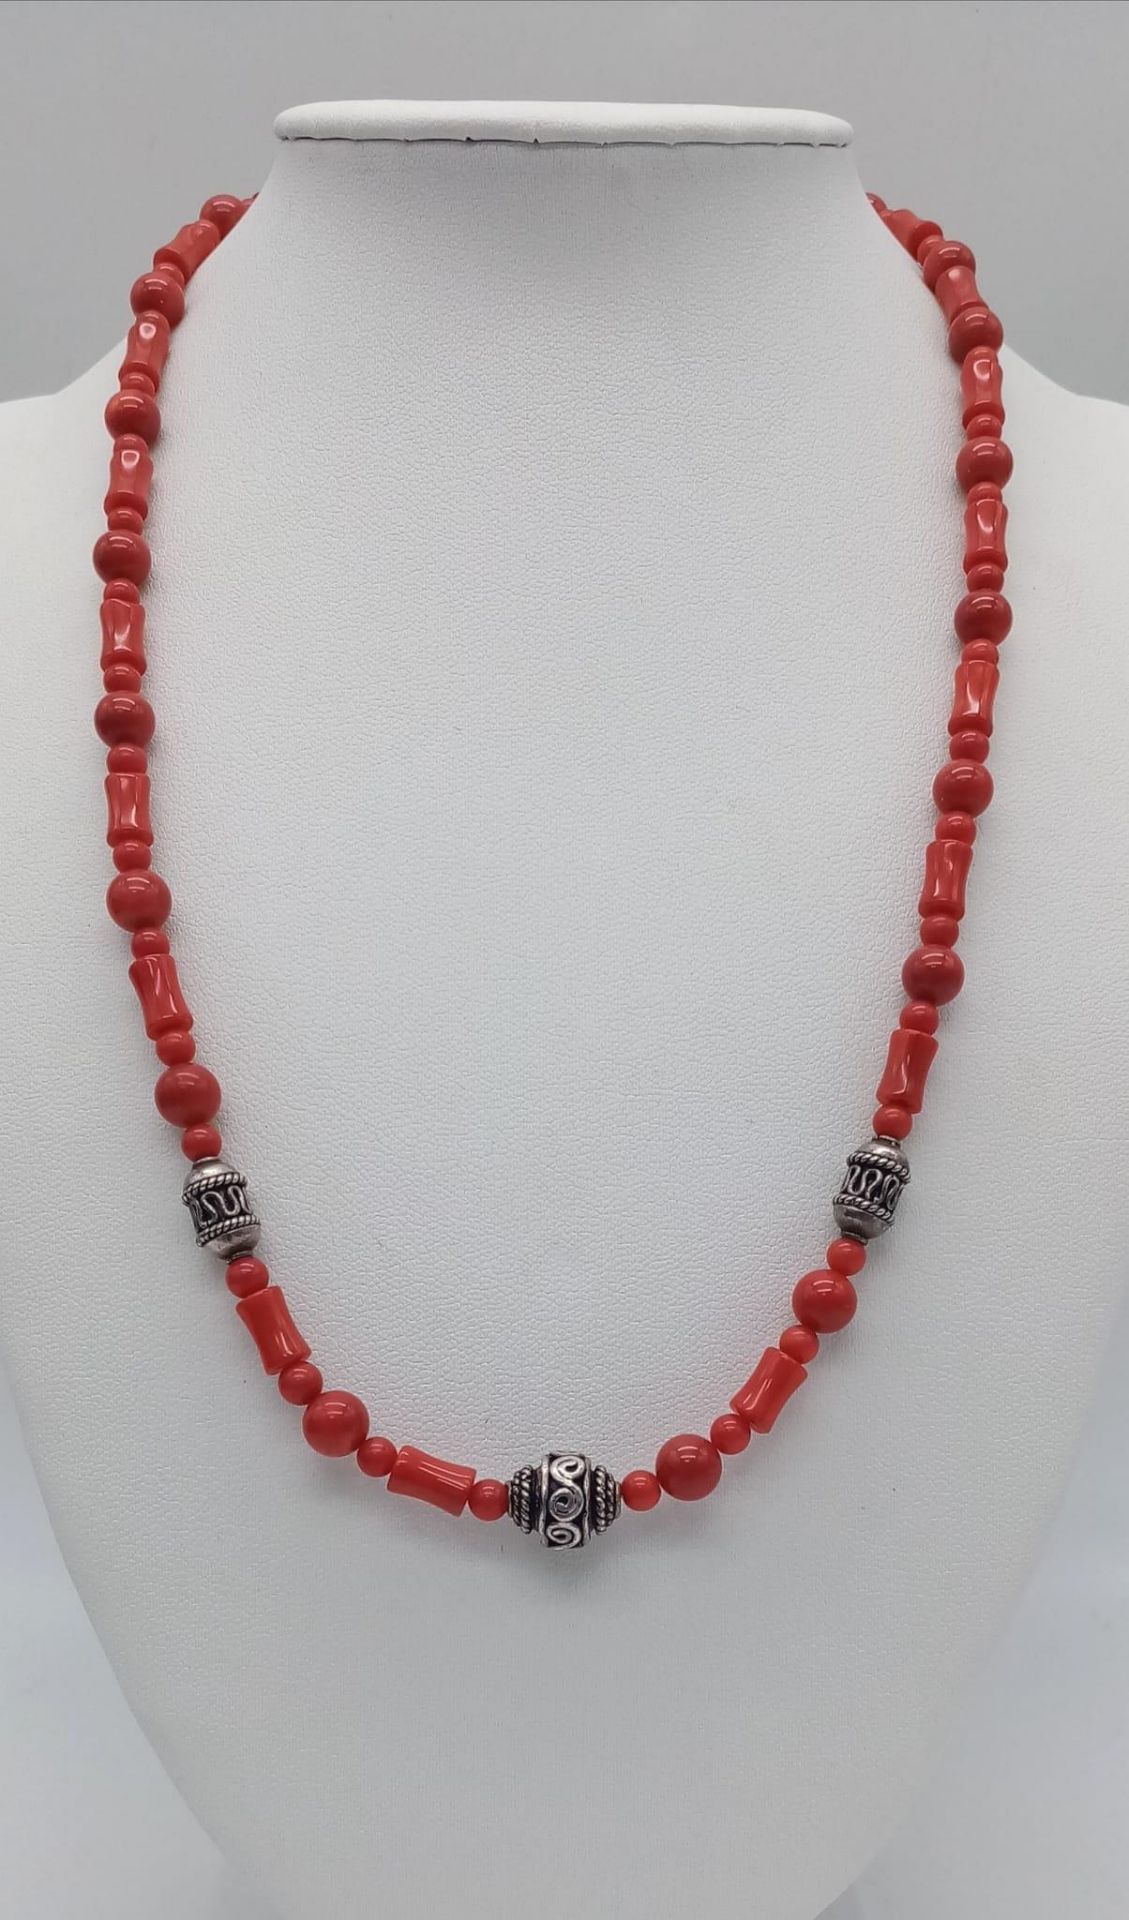 A Vintage Red Coral Necklace. 48cm.